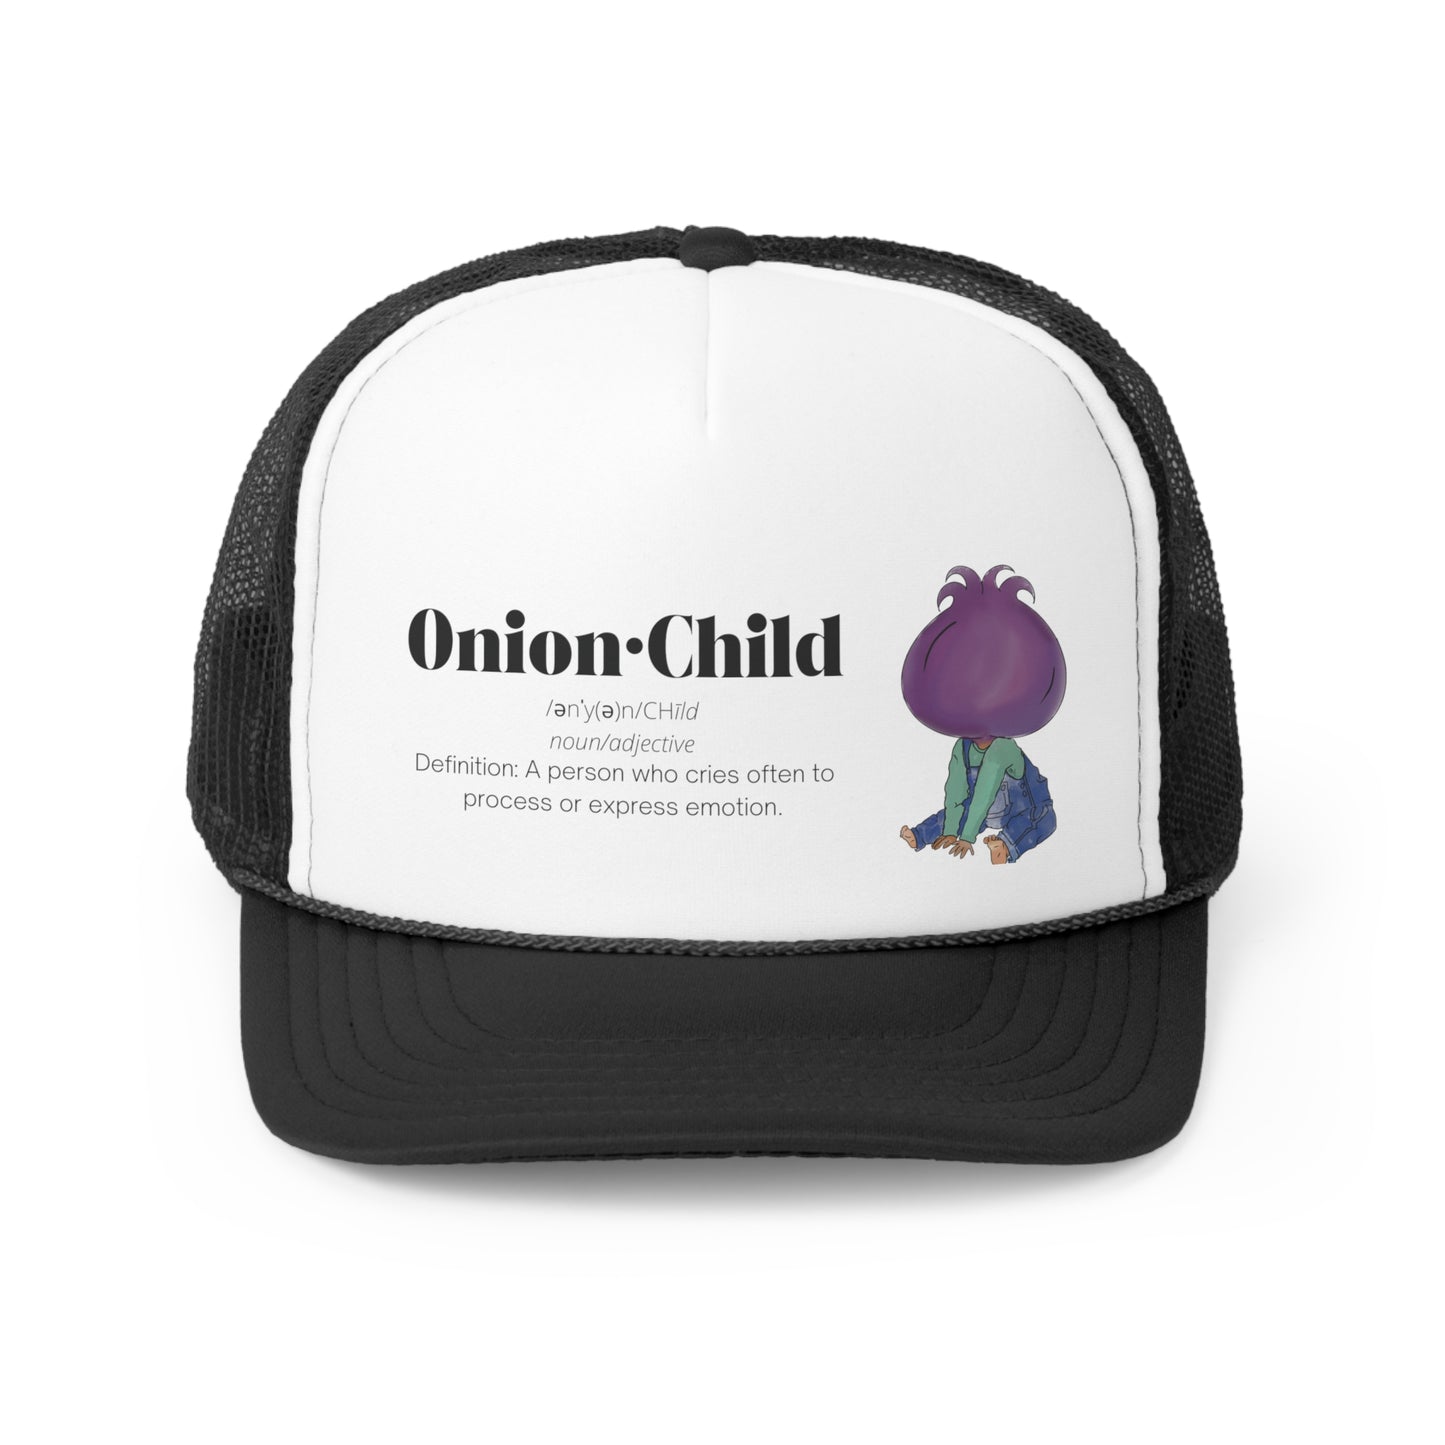 Onion Child Trucker Caps